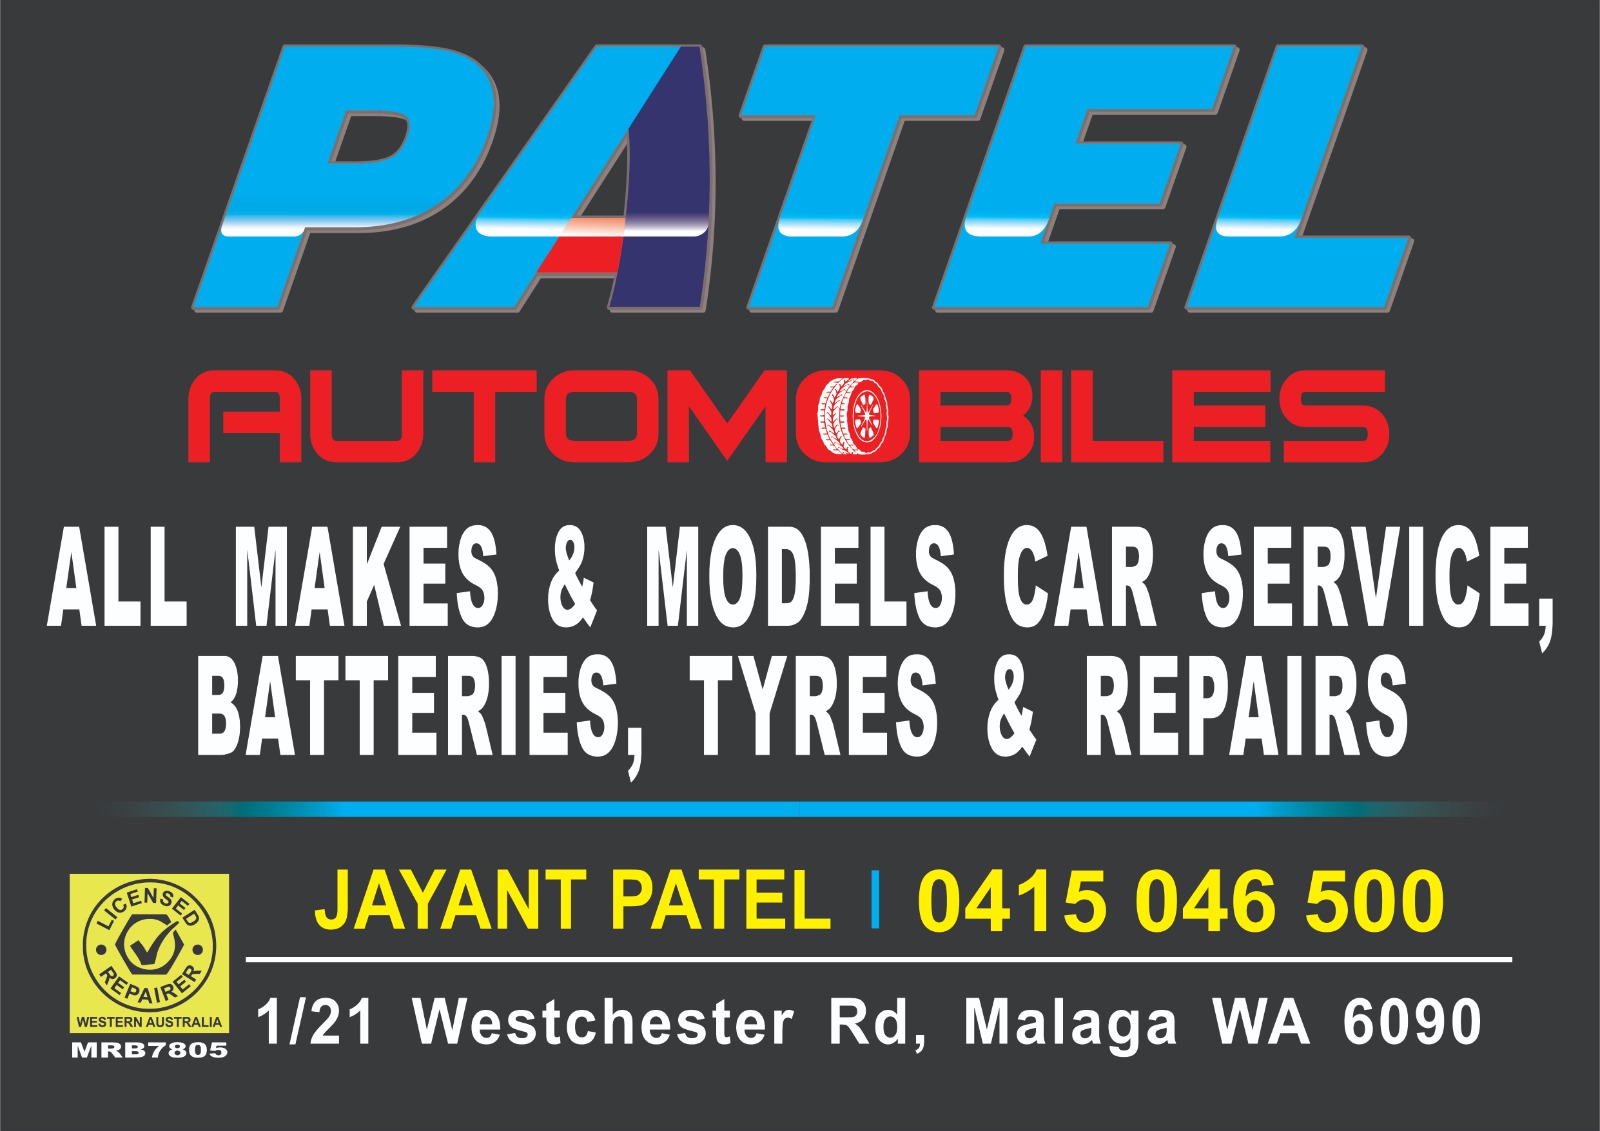 Patel Automobiles Malaga WA